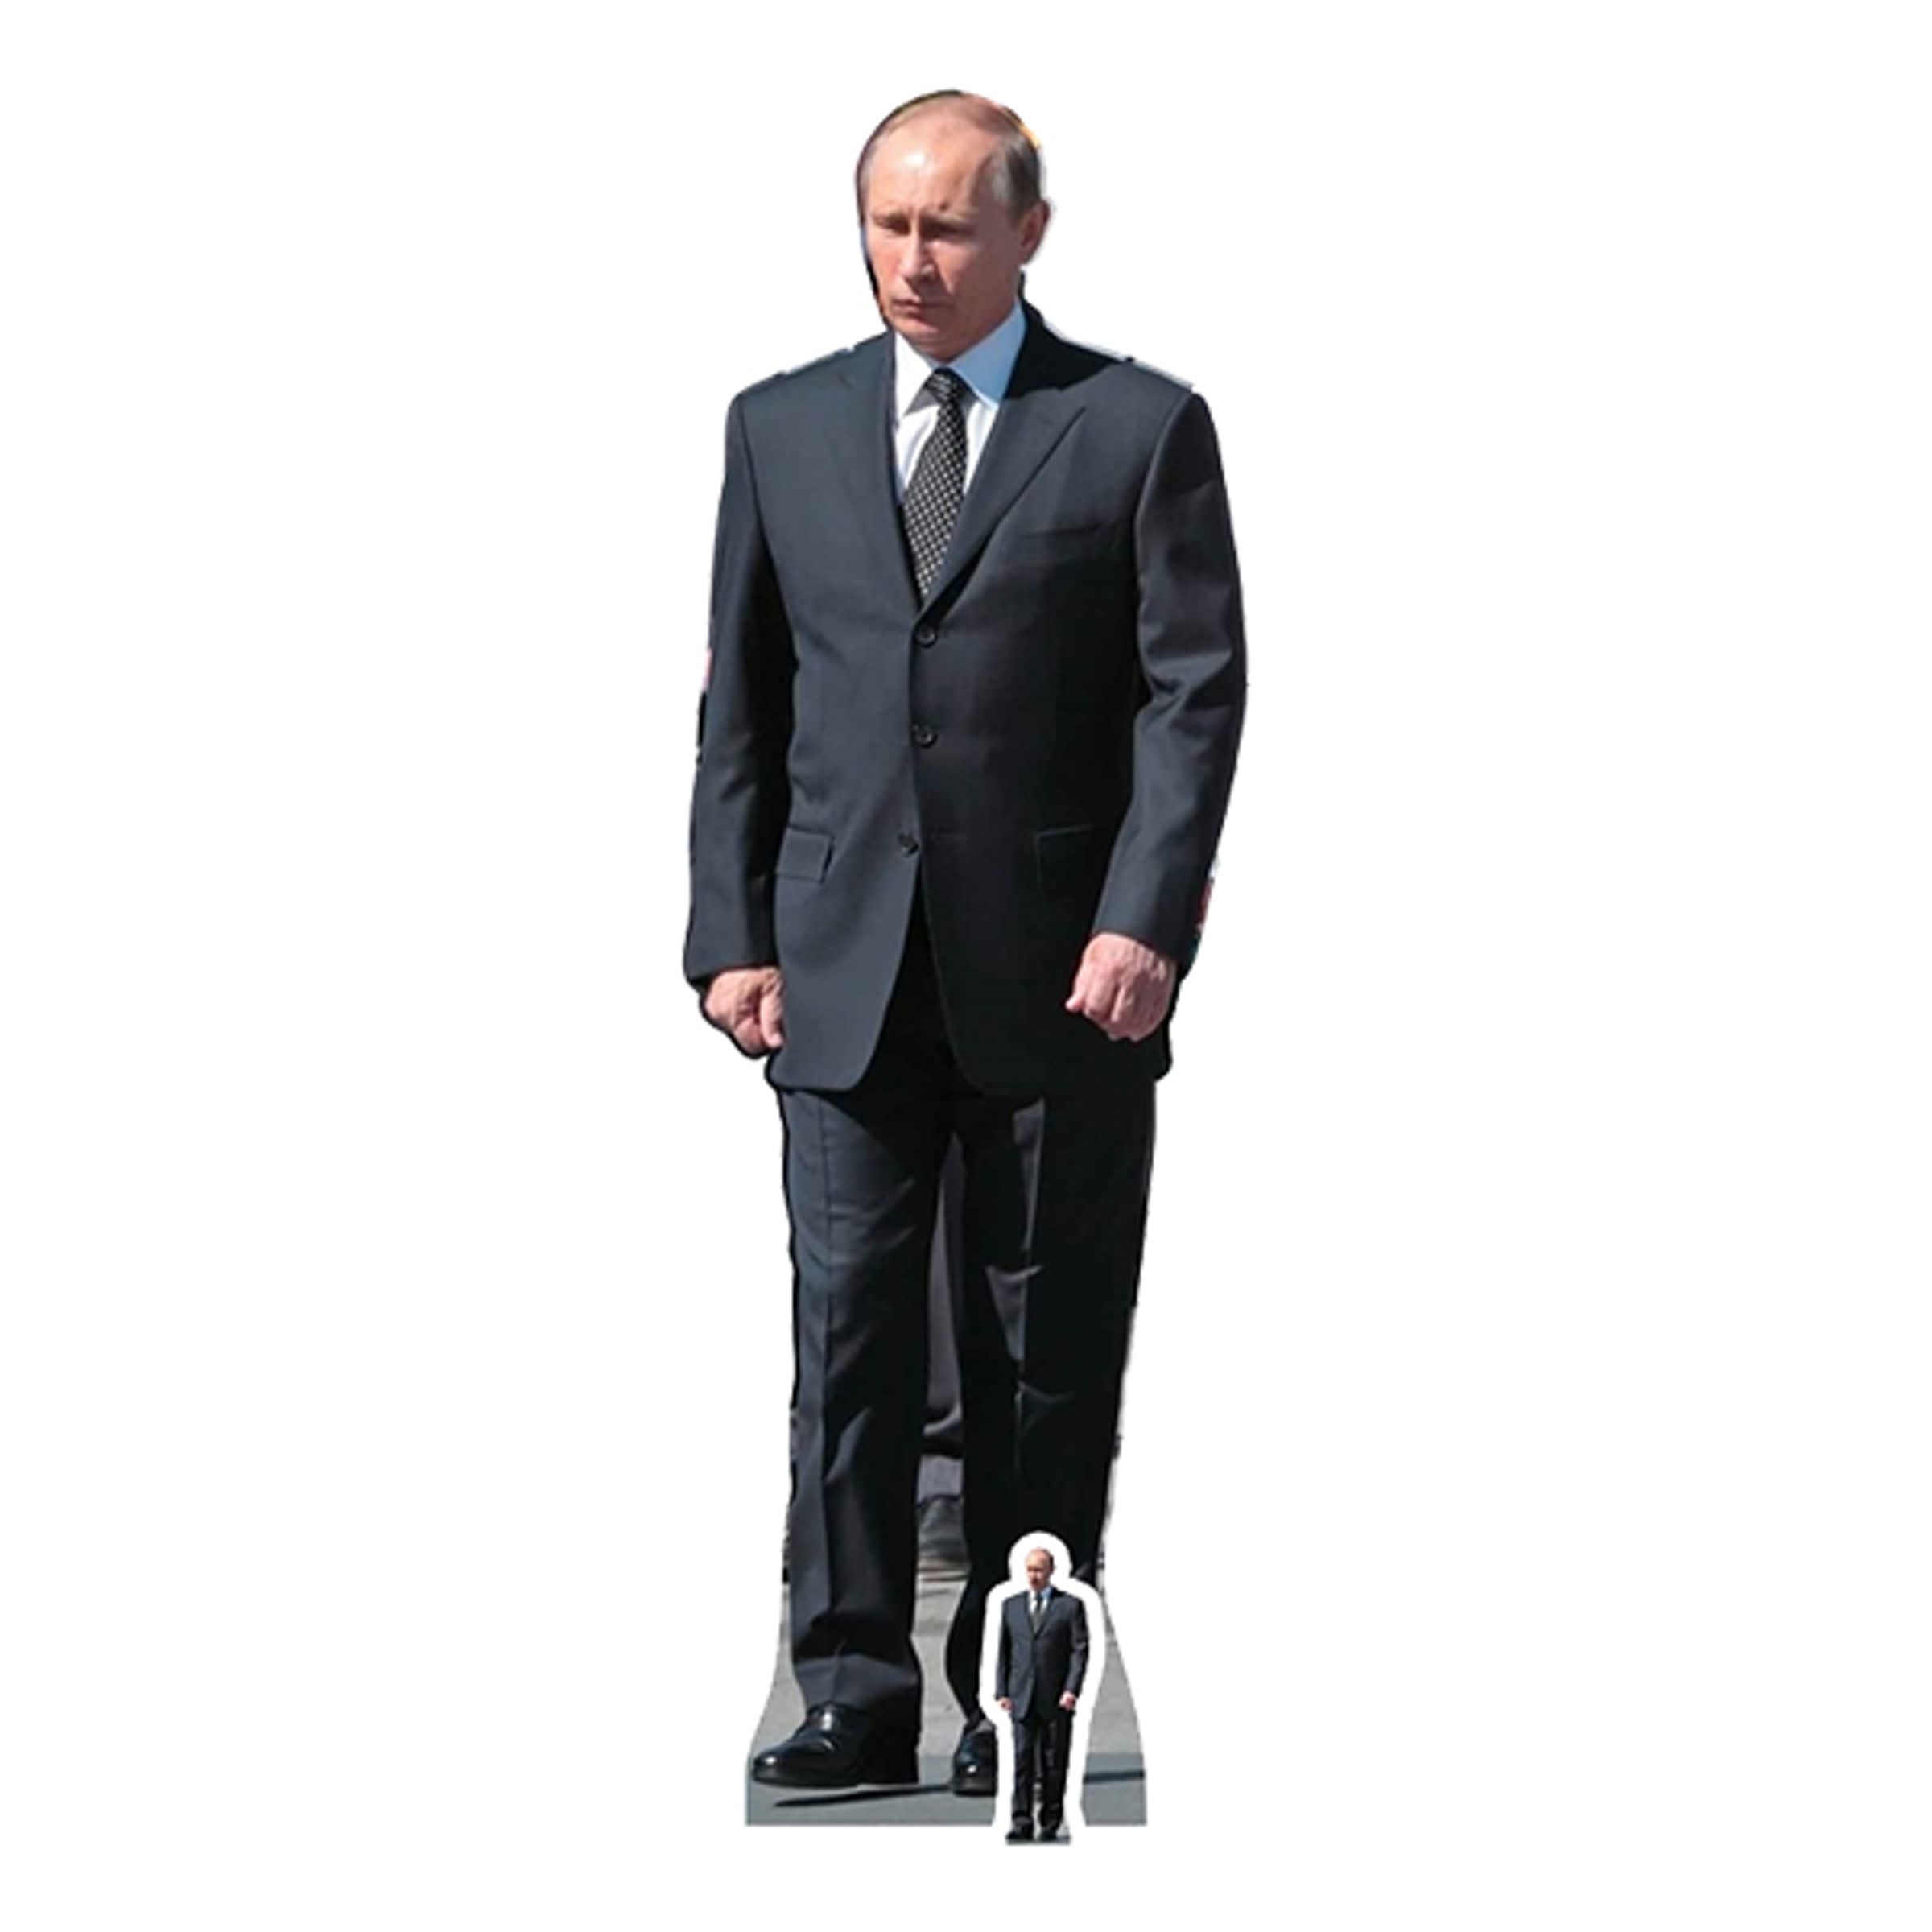 Vladimir Putin Kartongfigur